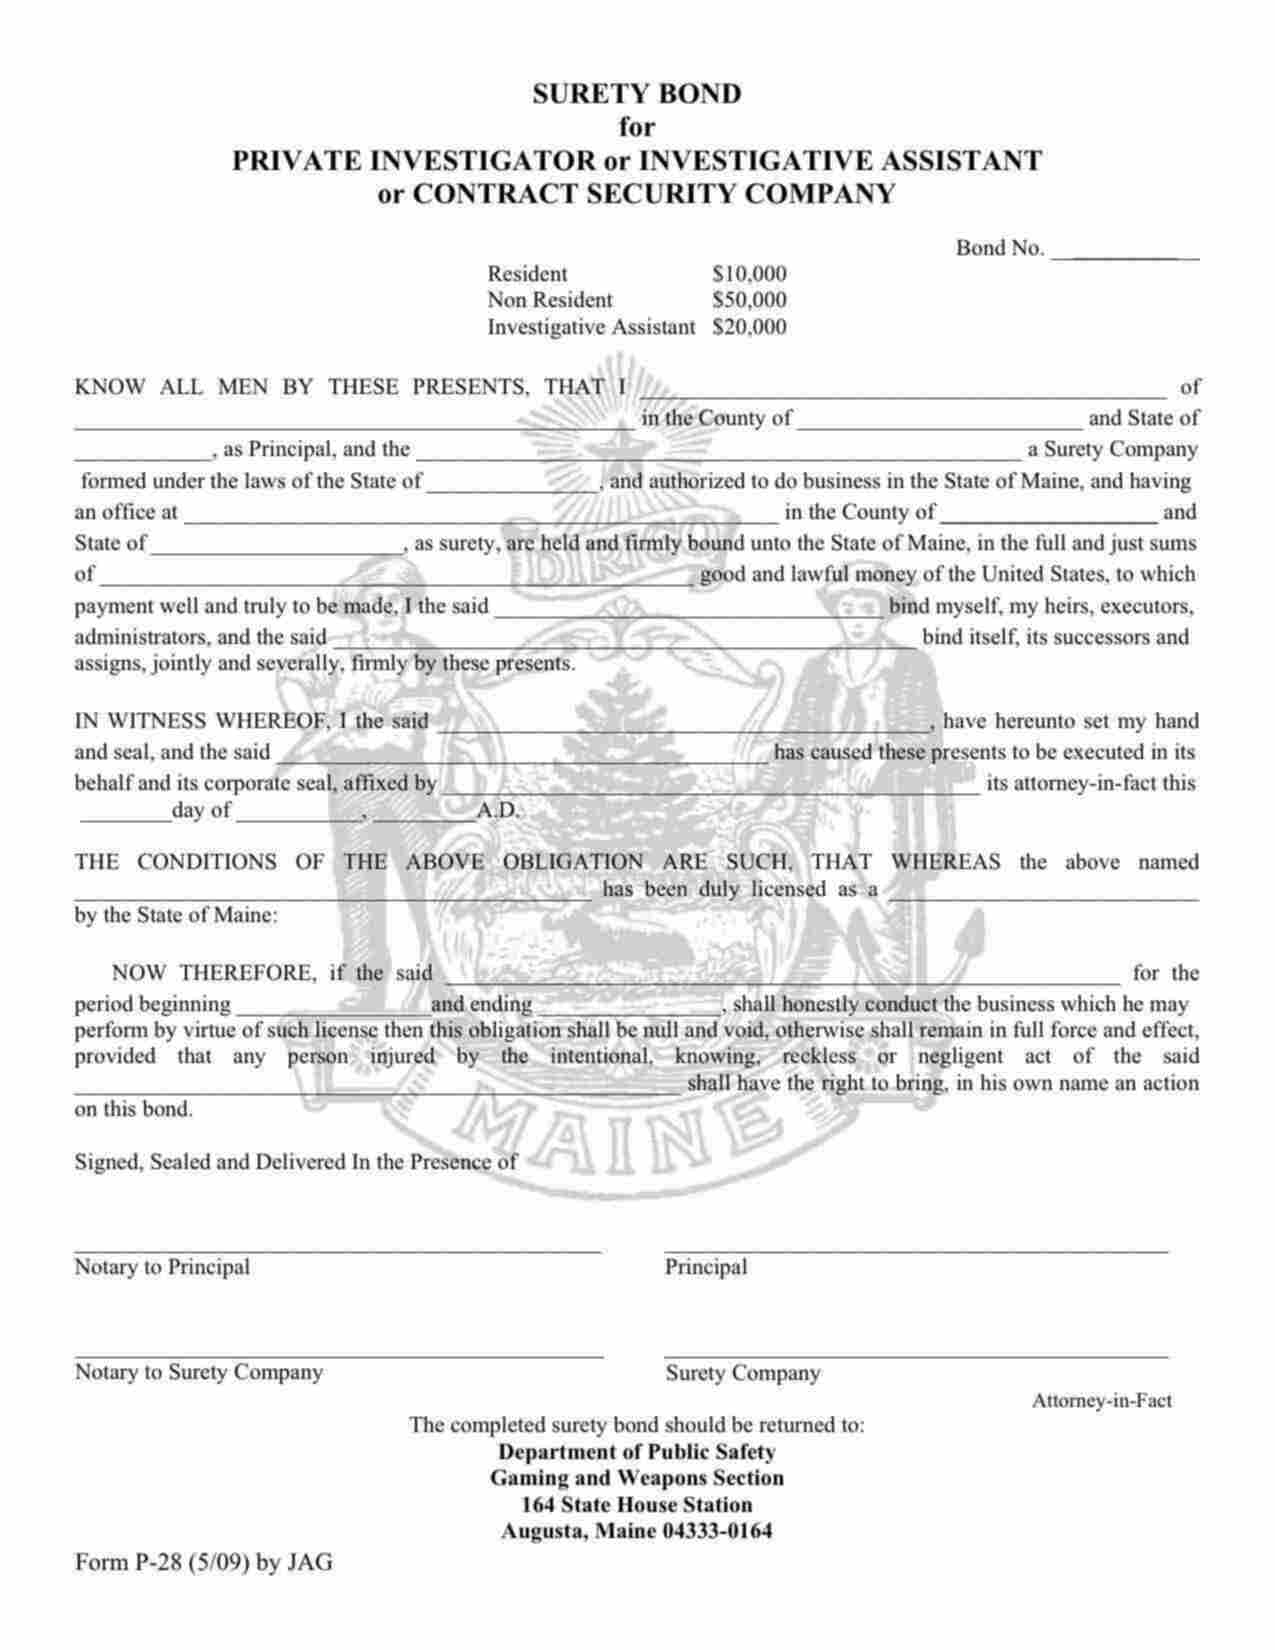 Maine Investigative Assistant Bond Form